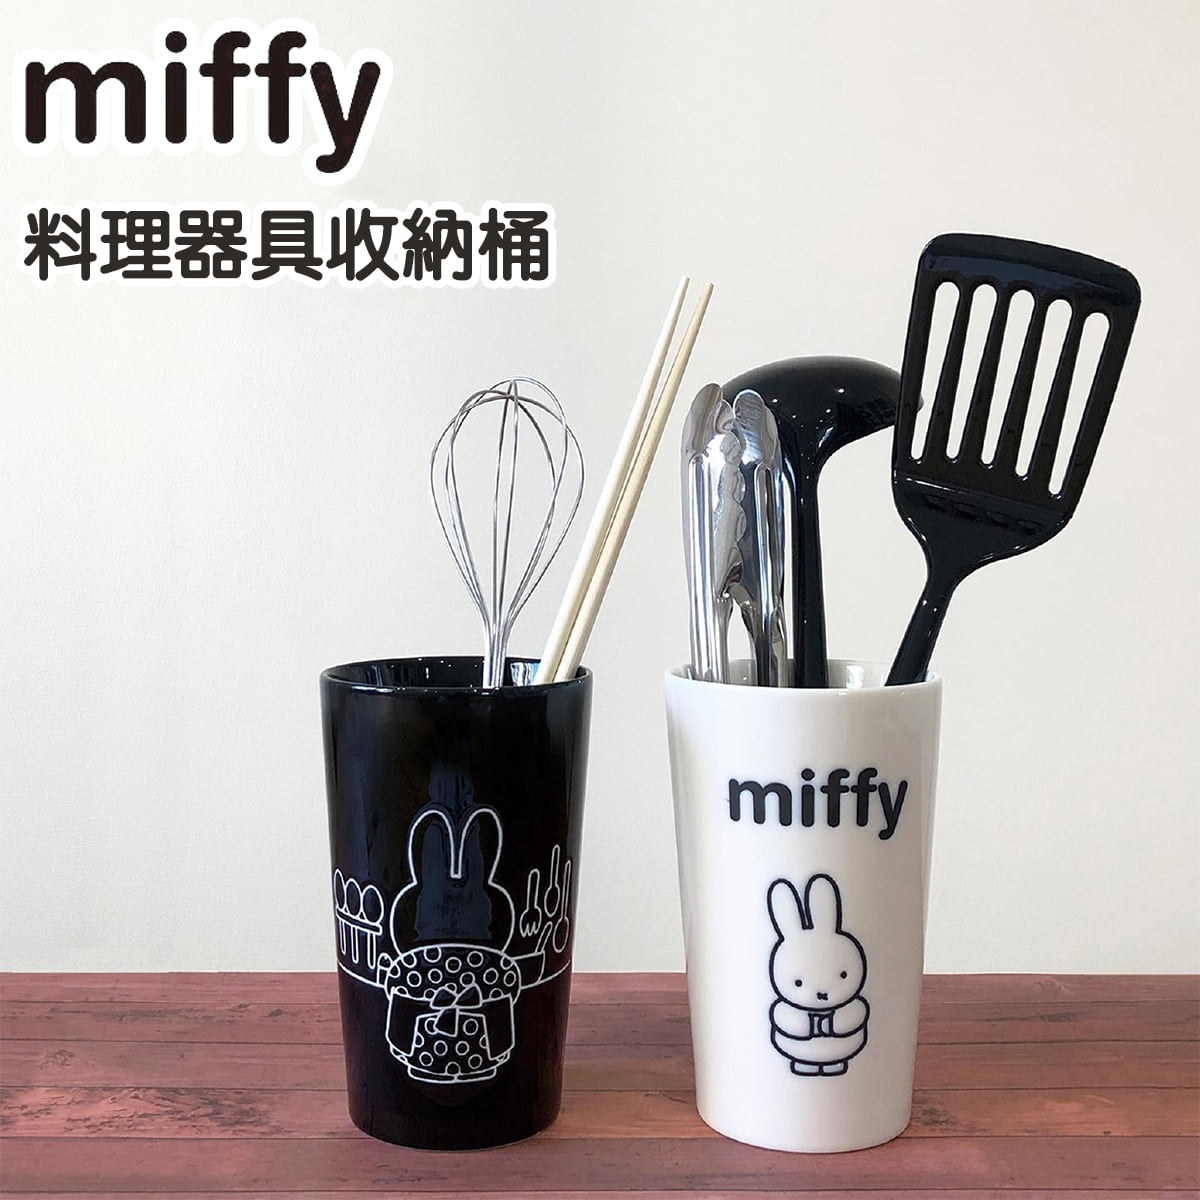 Kitchen Tool Holder - Miffy (Japan Edition)